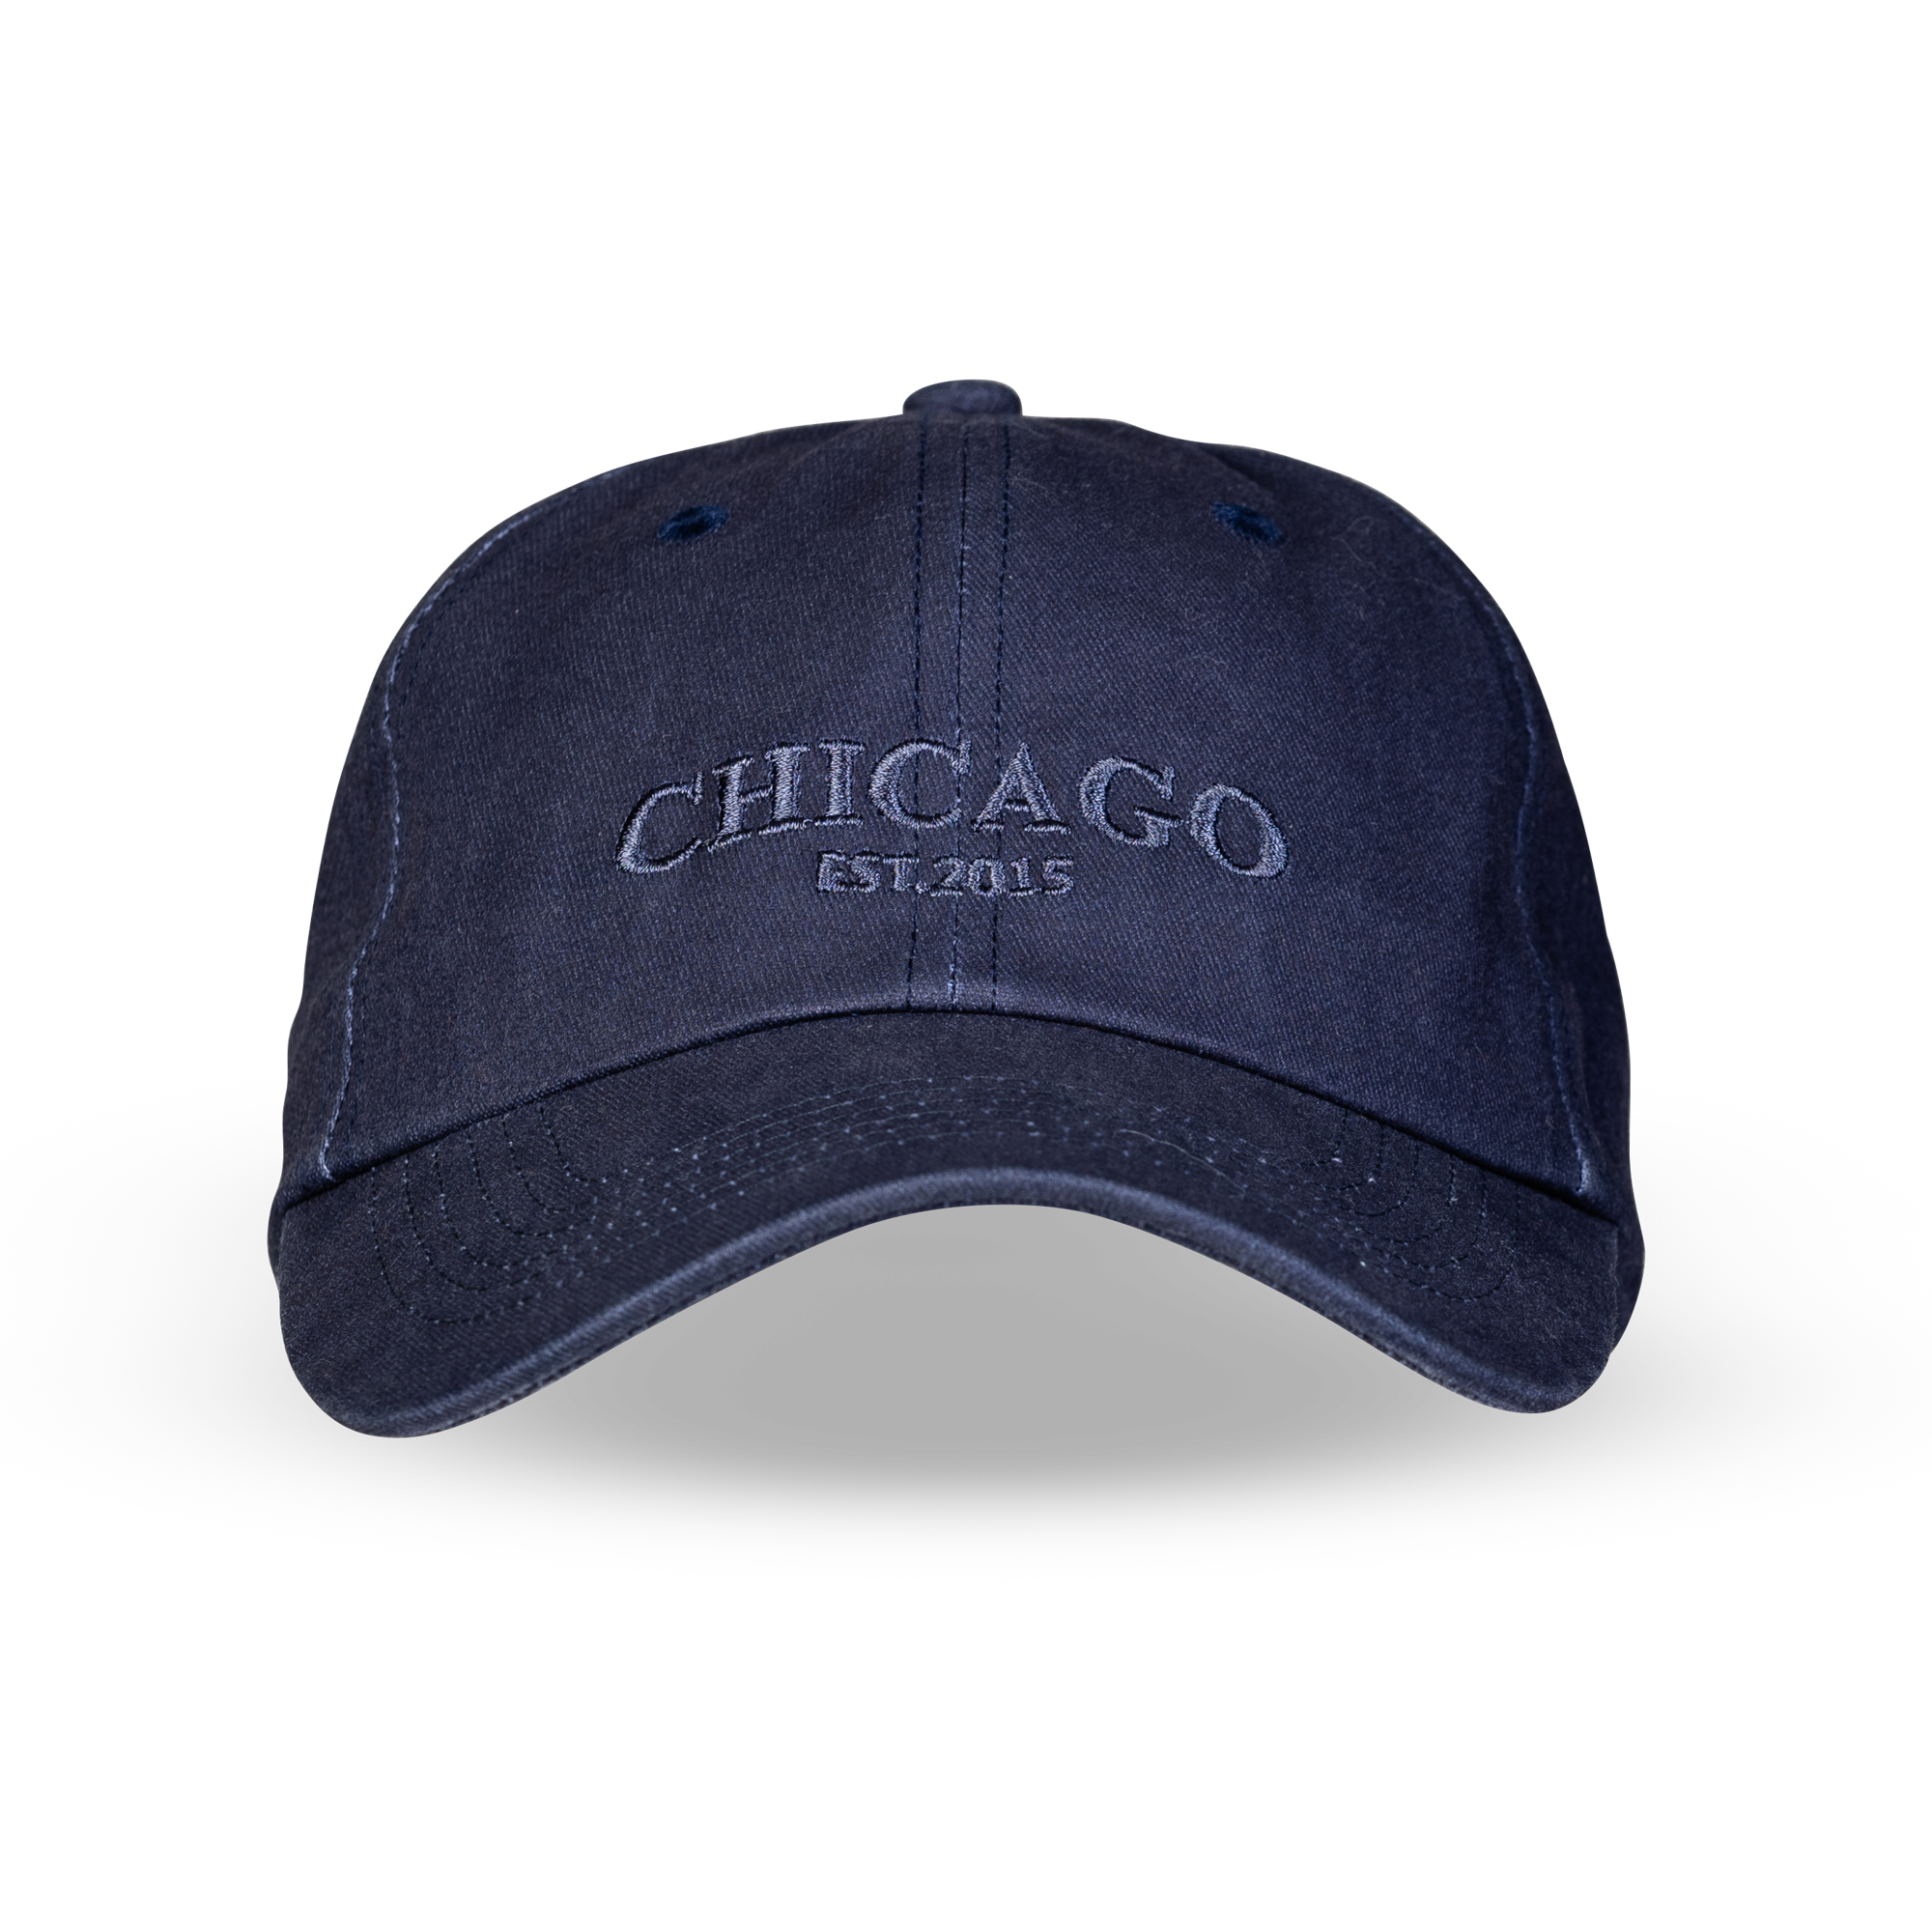 Chicago Vintage Cap Navy